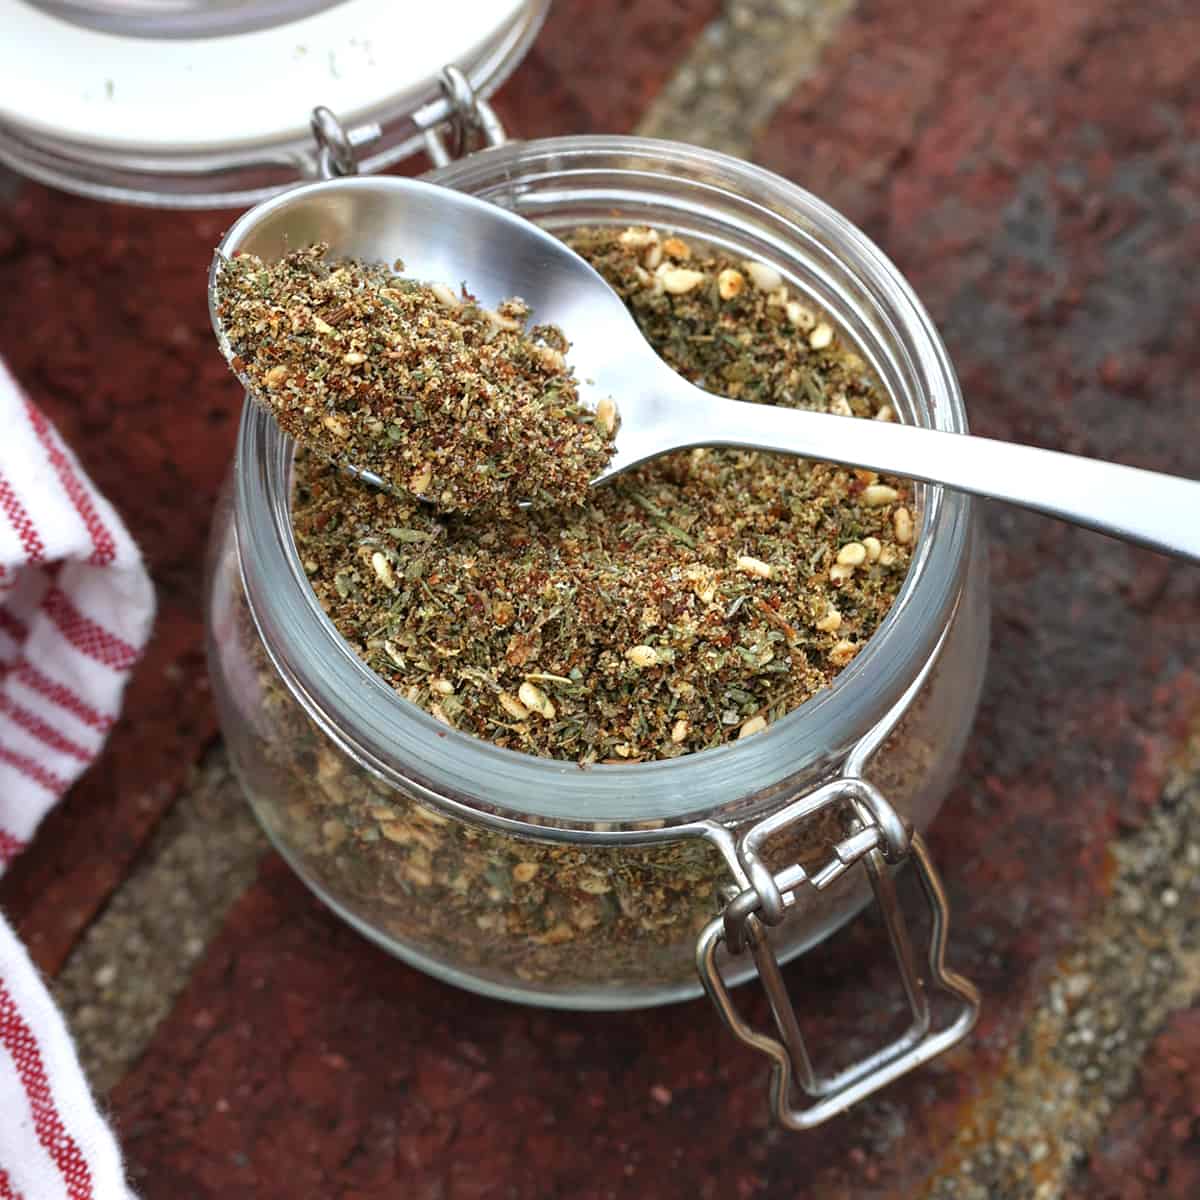 za'atar recipe homemade seasoning blend spice mix Middle Eastern sesame seeds sumac zaatar